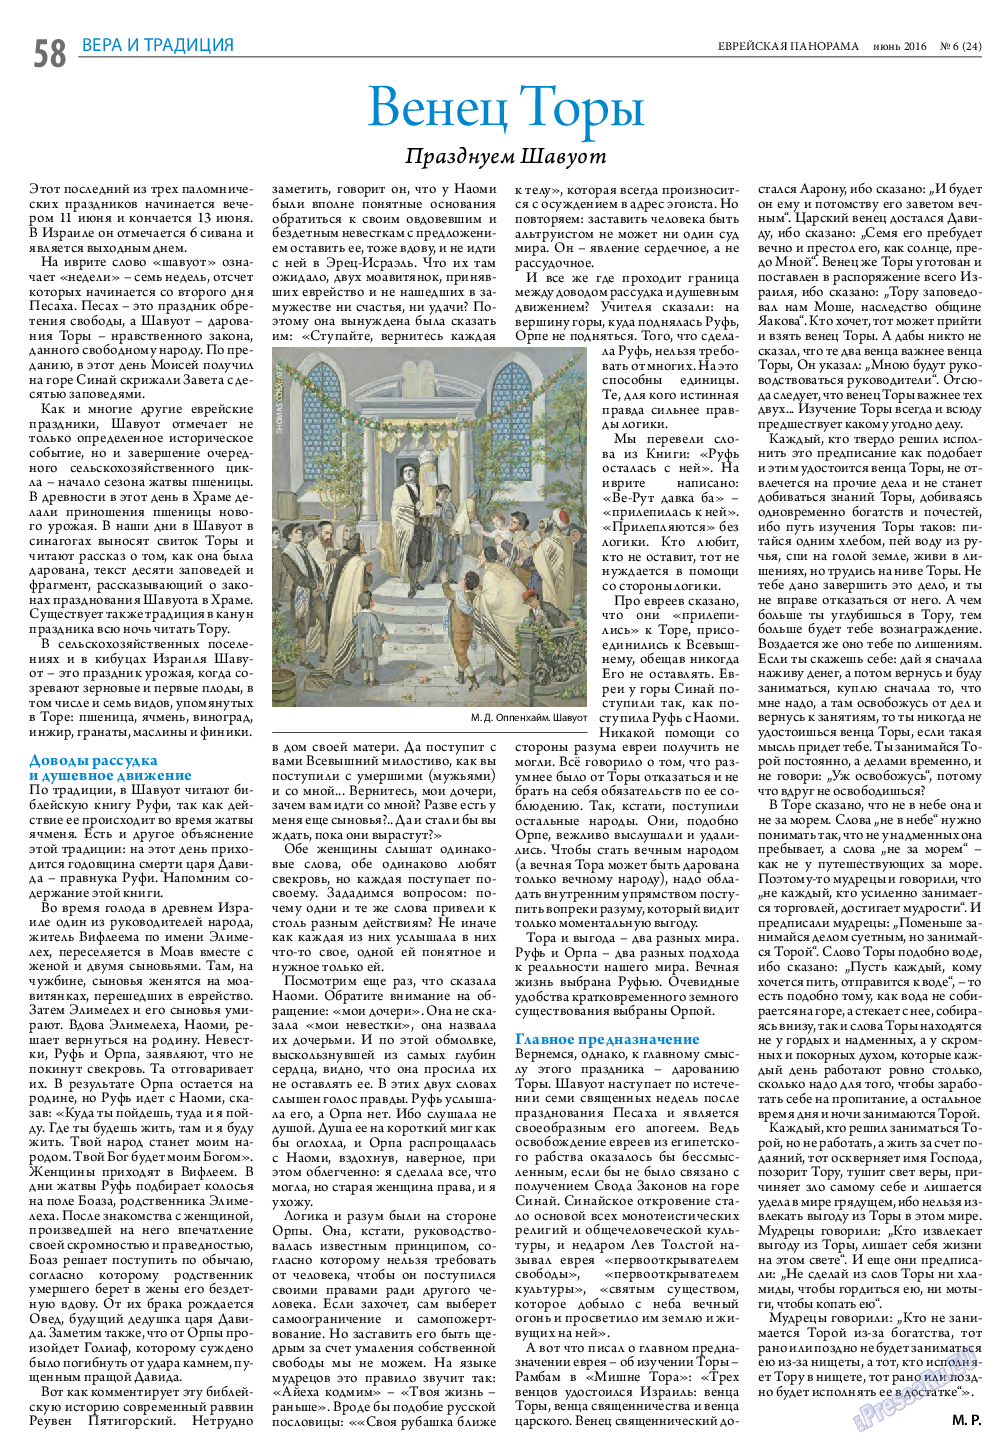 Еврейская панорама, газета. 2016 №6 стр.58